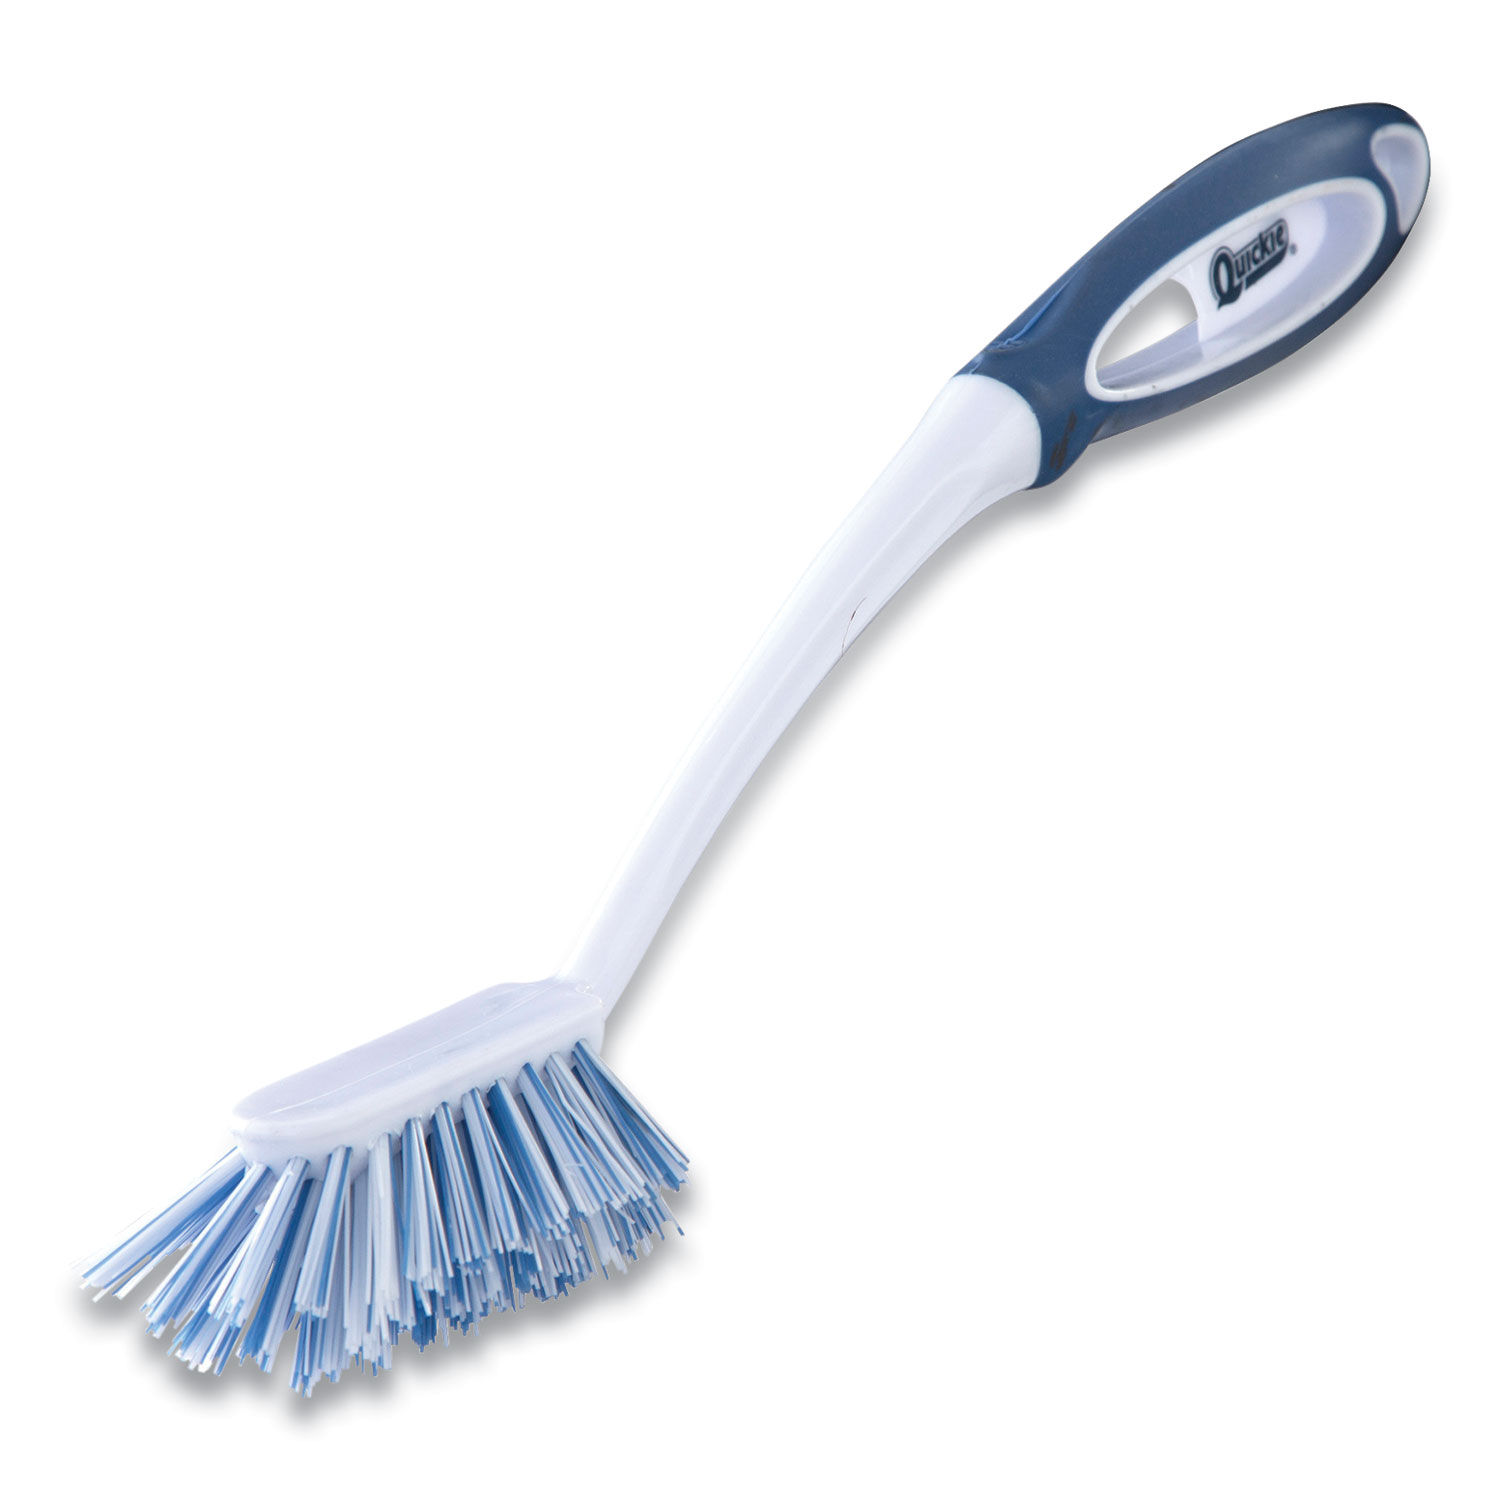 All-Purpose Scrub Brush Polypropylene, 9", White/Blue